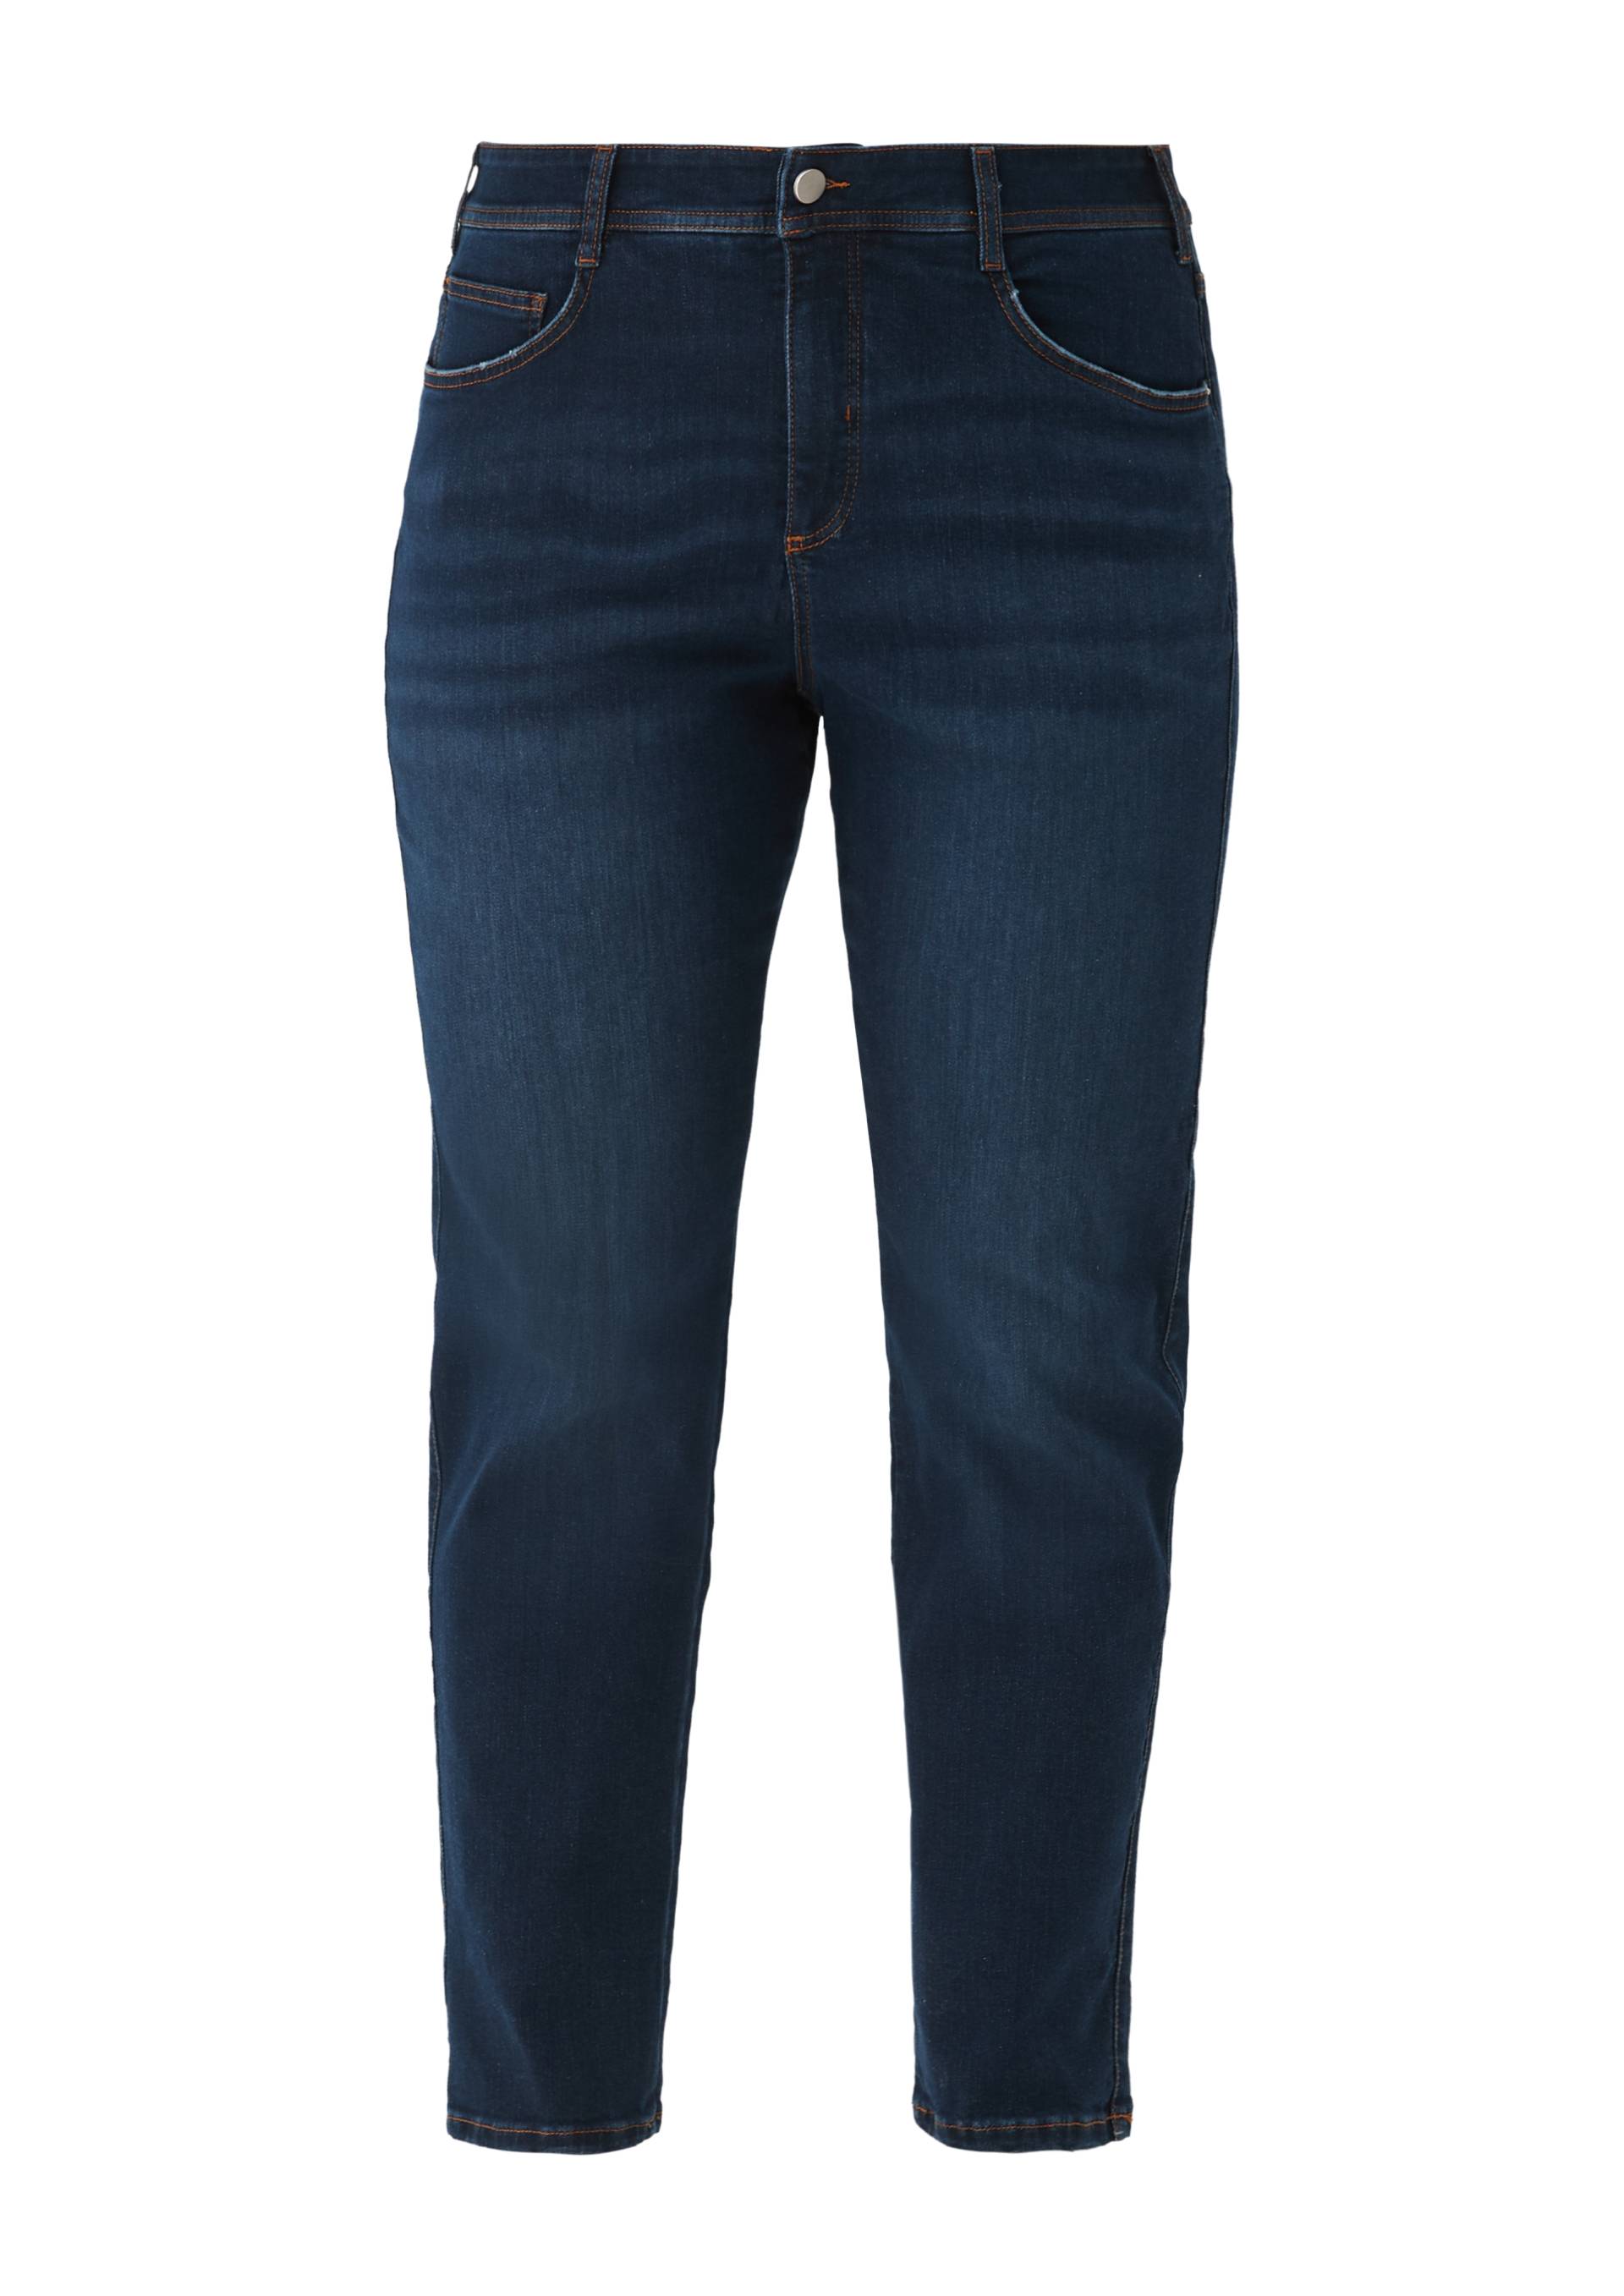 s.Oliver - Jeans / Curvy Fit / Mid Rise / Slim Leg, Damen, blau von s.Oliver